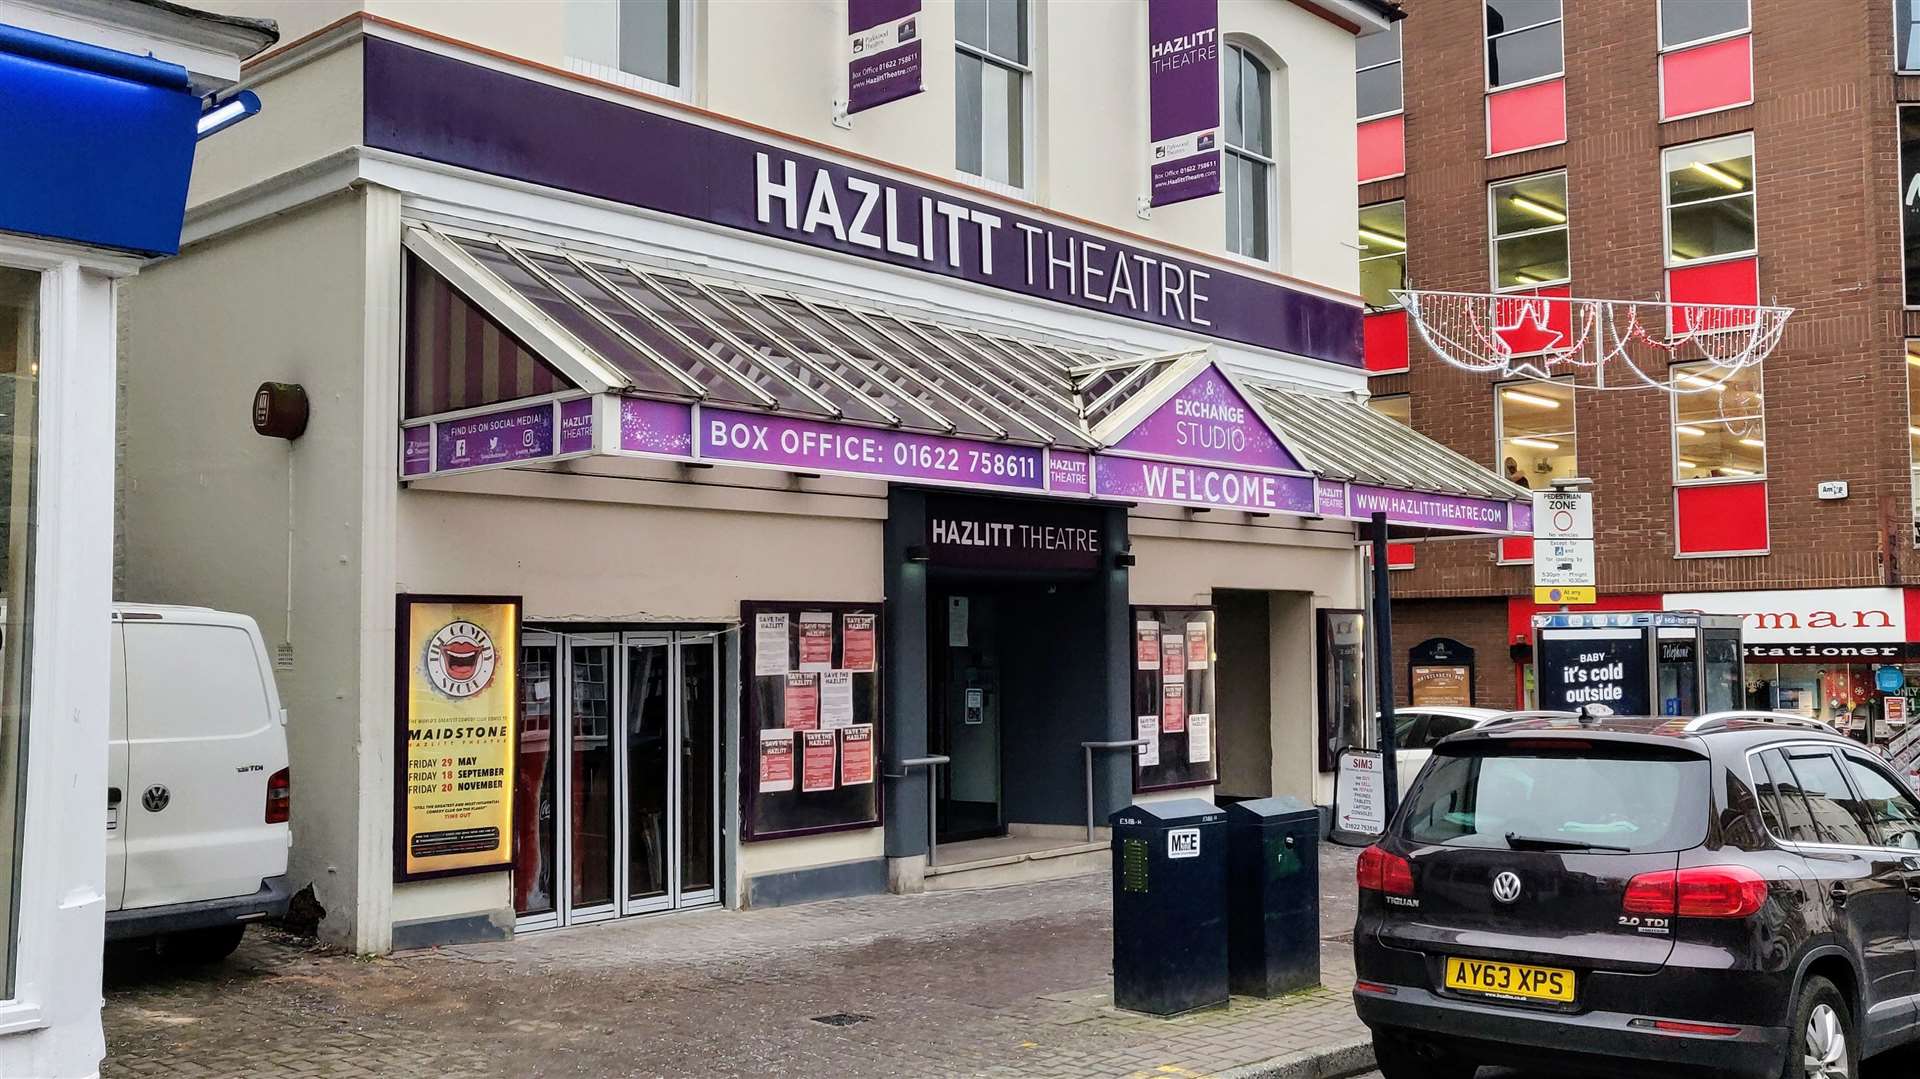 The Hazlitt Theatre in Earl Street, Maidstone